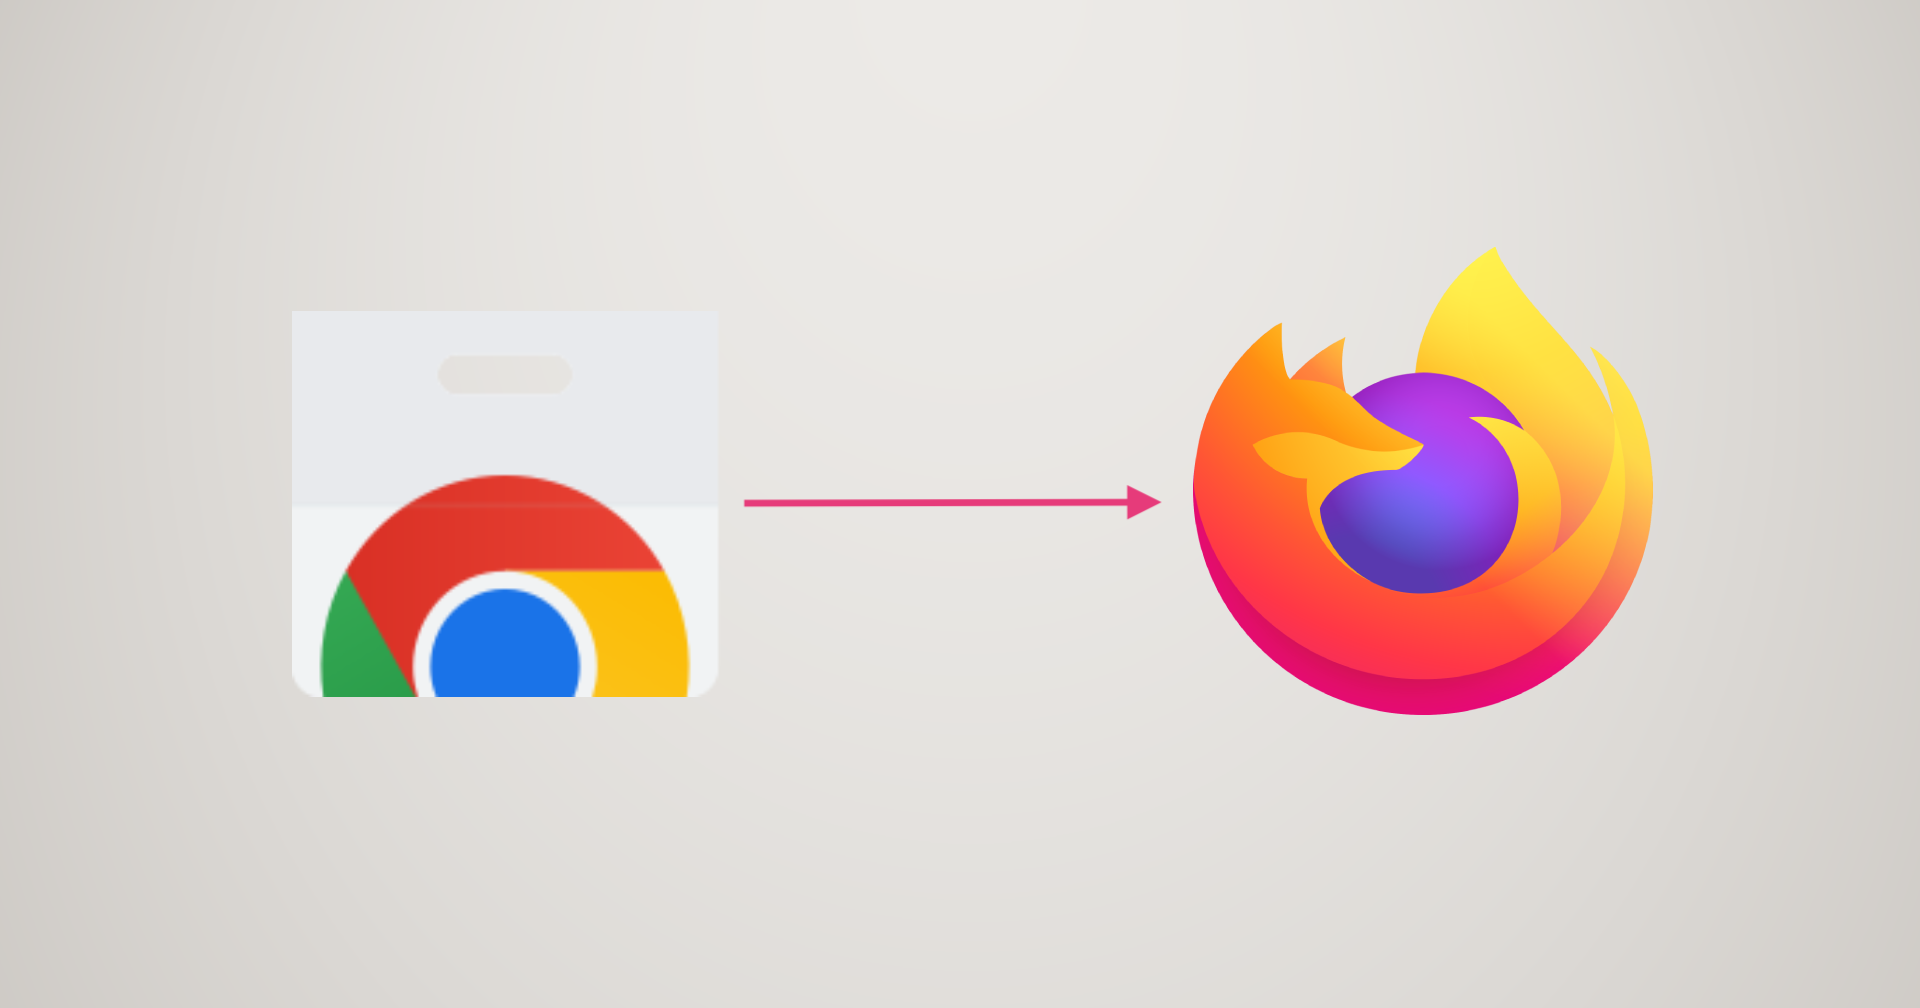 Firefox เพิ่มฟีเจอร์นำเข้าส่วนขยายจาก Chrome แต่ว่าเป็นการเปรียบเทียบกับ Firefox Extension นะ